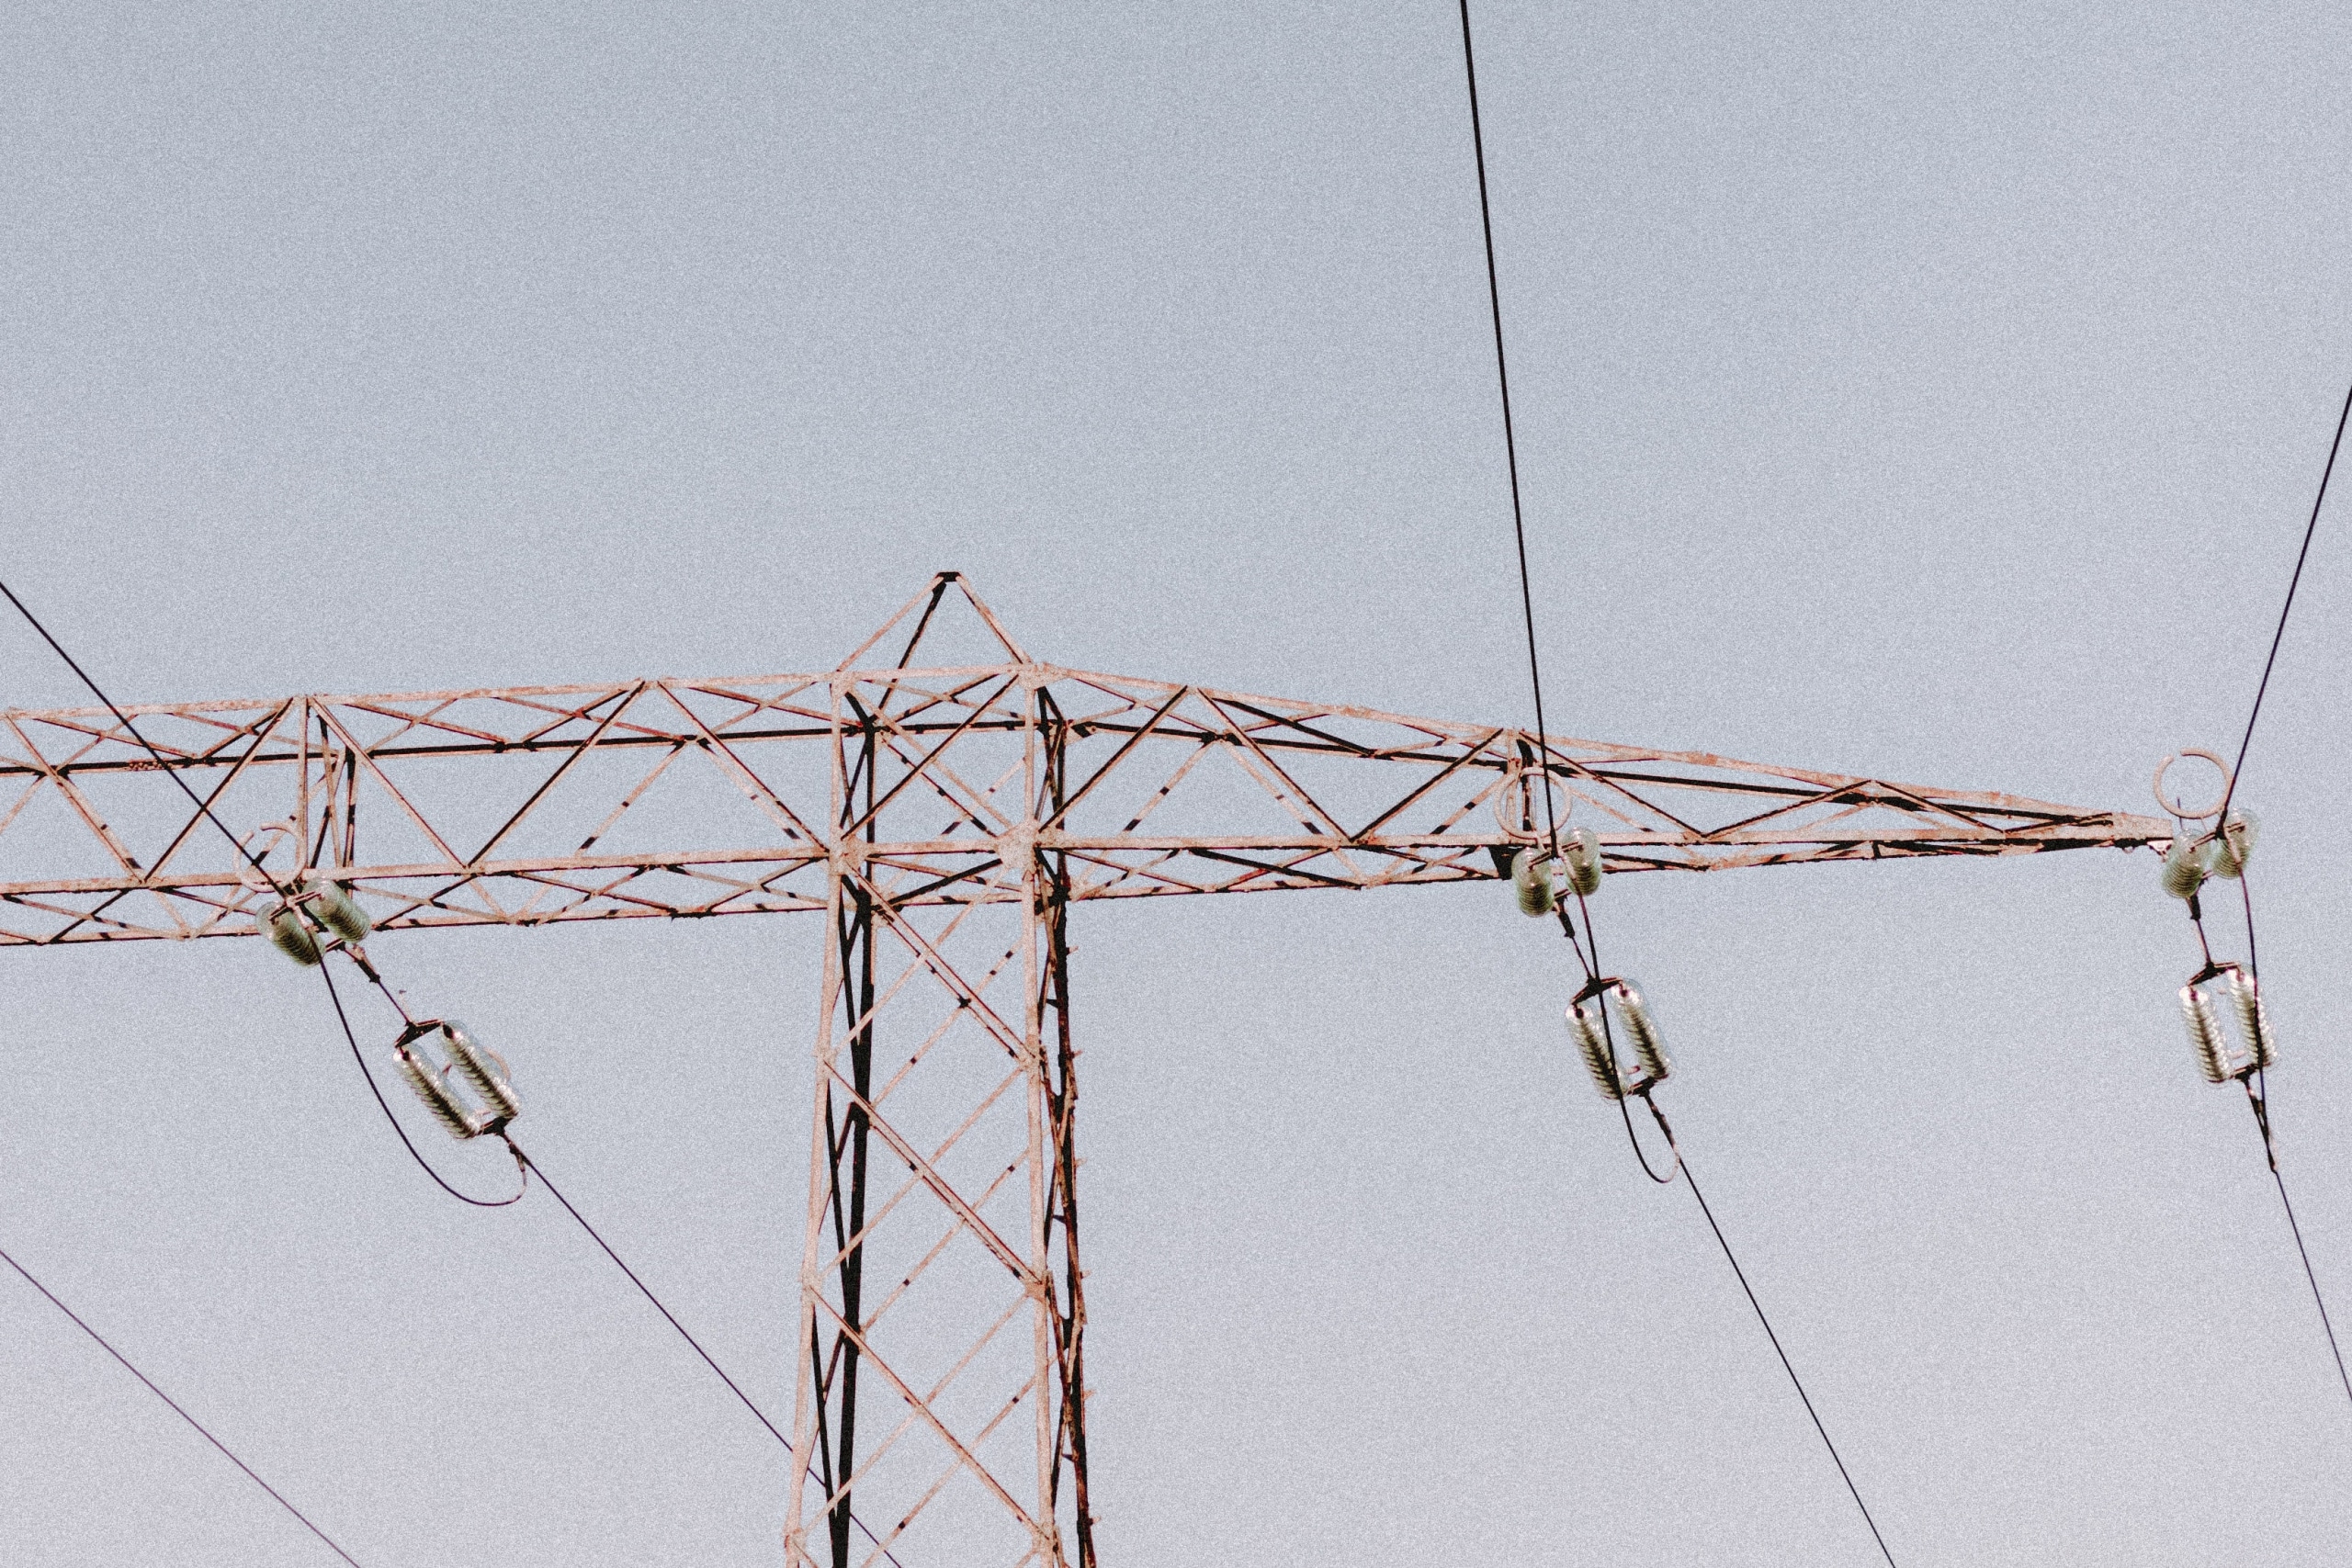 Monte Alto Electricity Rates, Monte Alto Energy Plans, Monte Alto Electricity Plans, Monte Alto Energy Rates, Cheap Electricity Rates in Monte Alto, Cheap Electricity Plans in Monte Alto, Best Electricity Rates in Monte Alto, Best Electricity Plans in Monte Alto